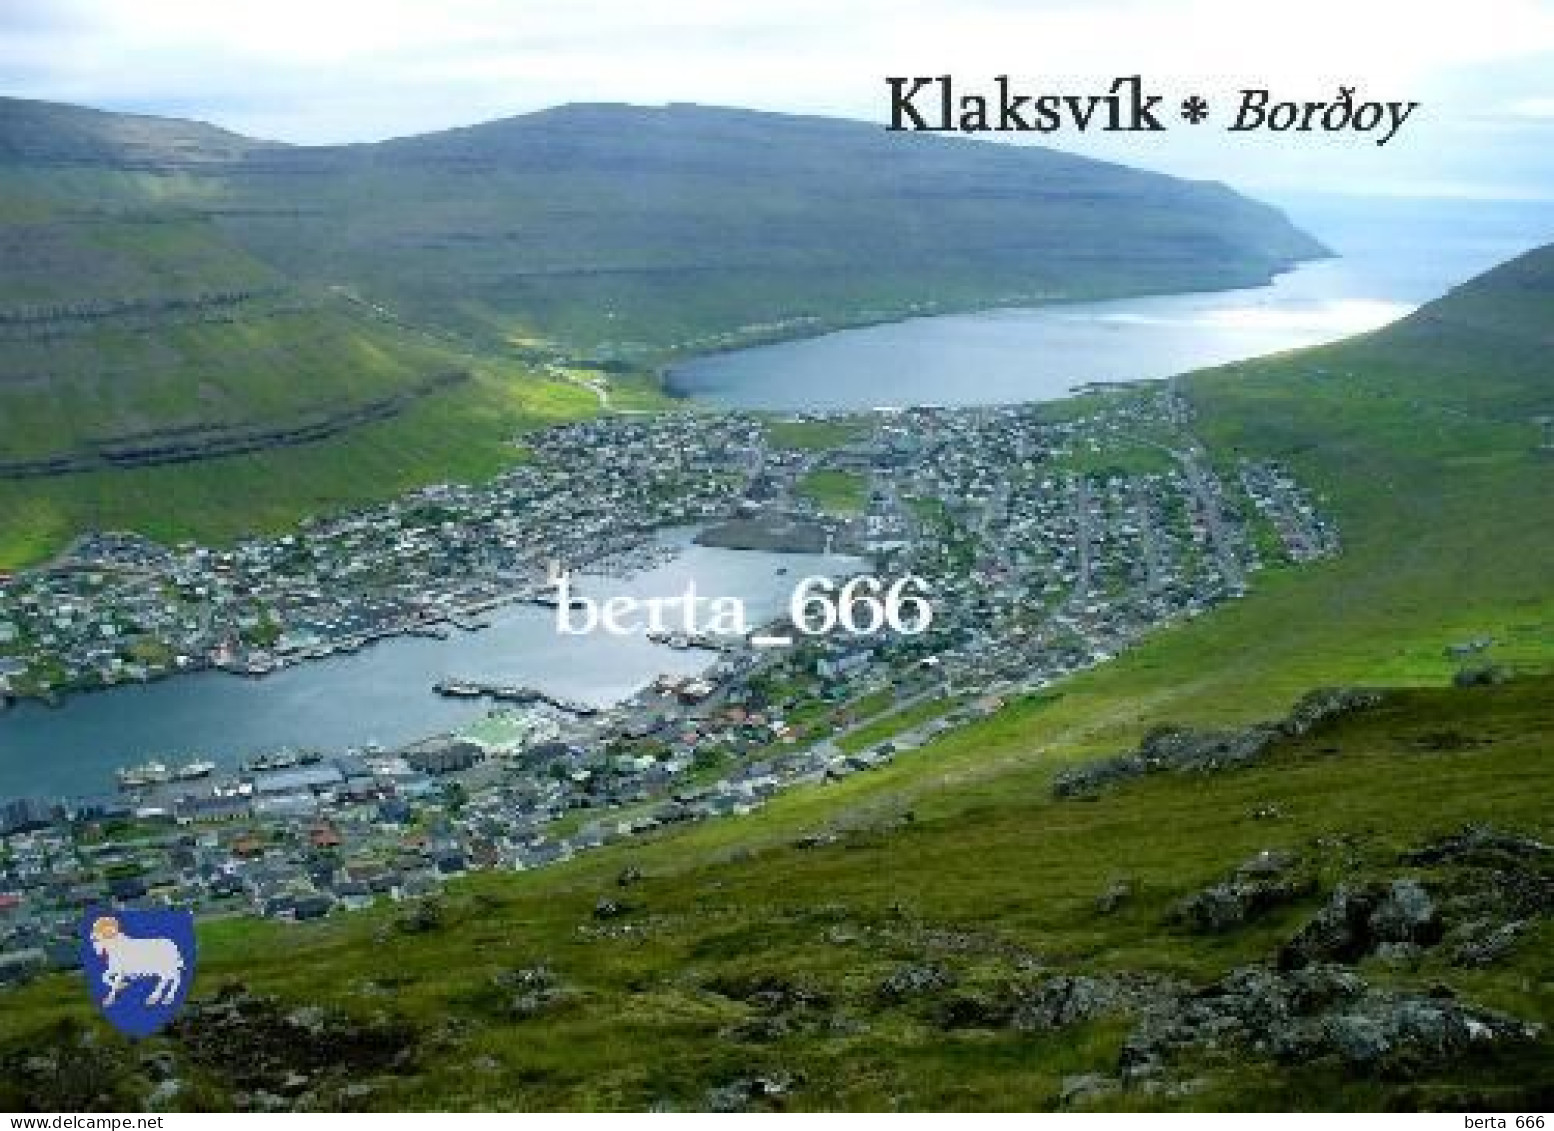 Faroe Islands Bordoy Klaksvik Aerial View New Postcard - Färöer